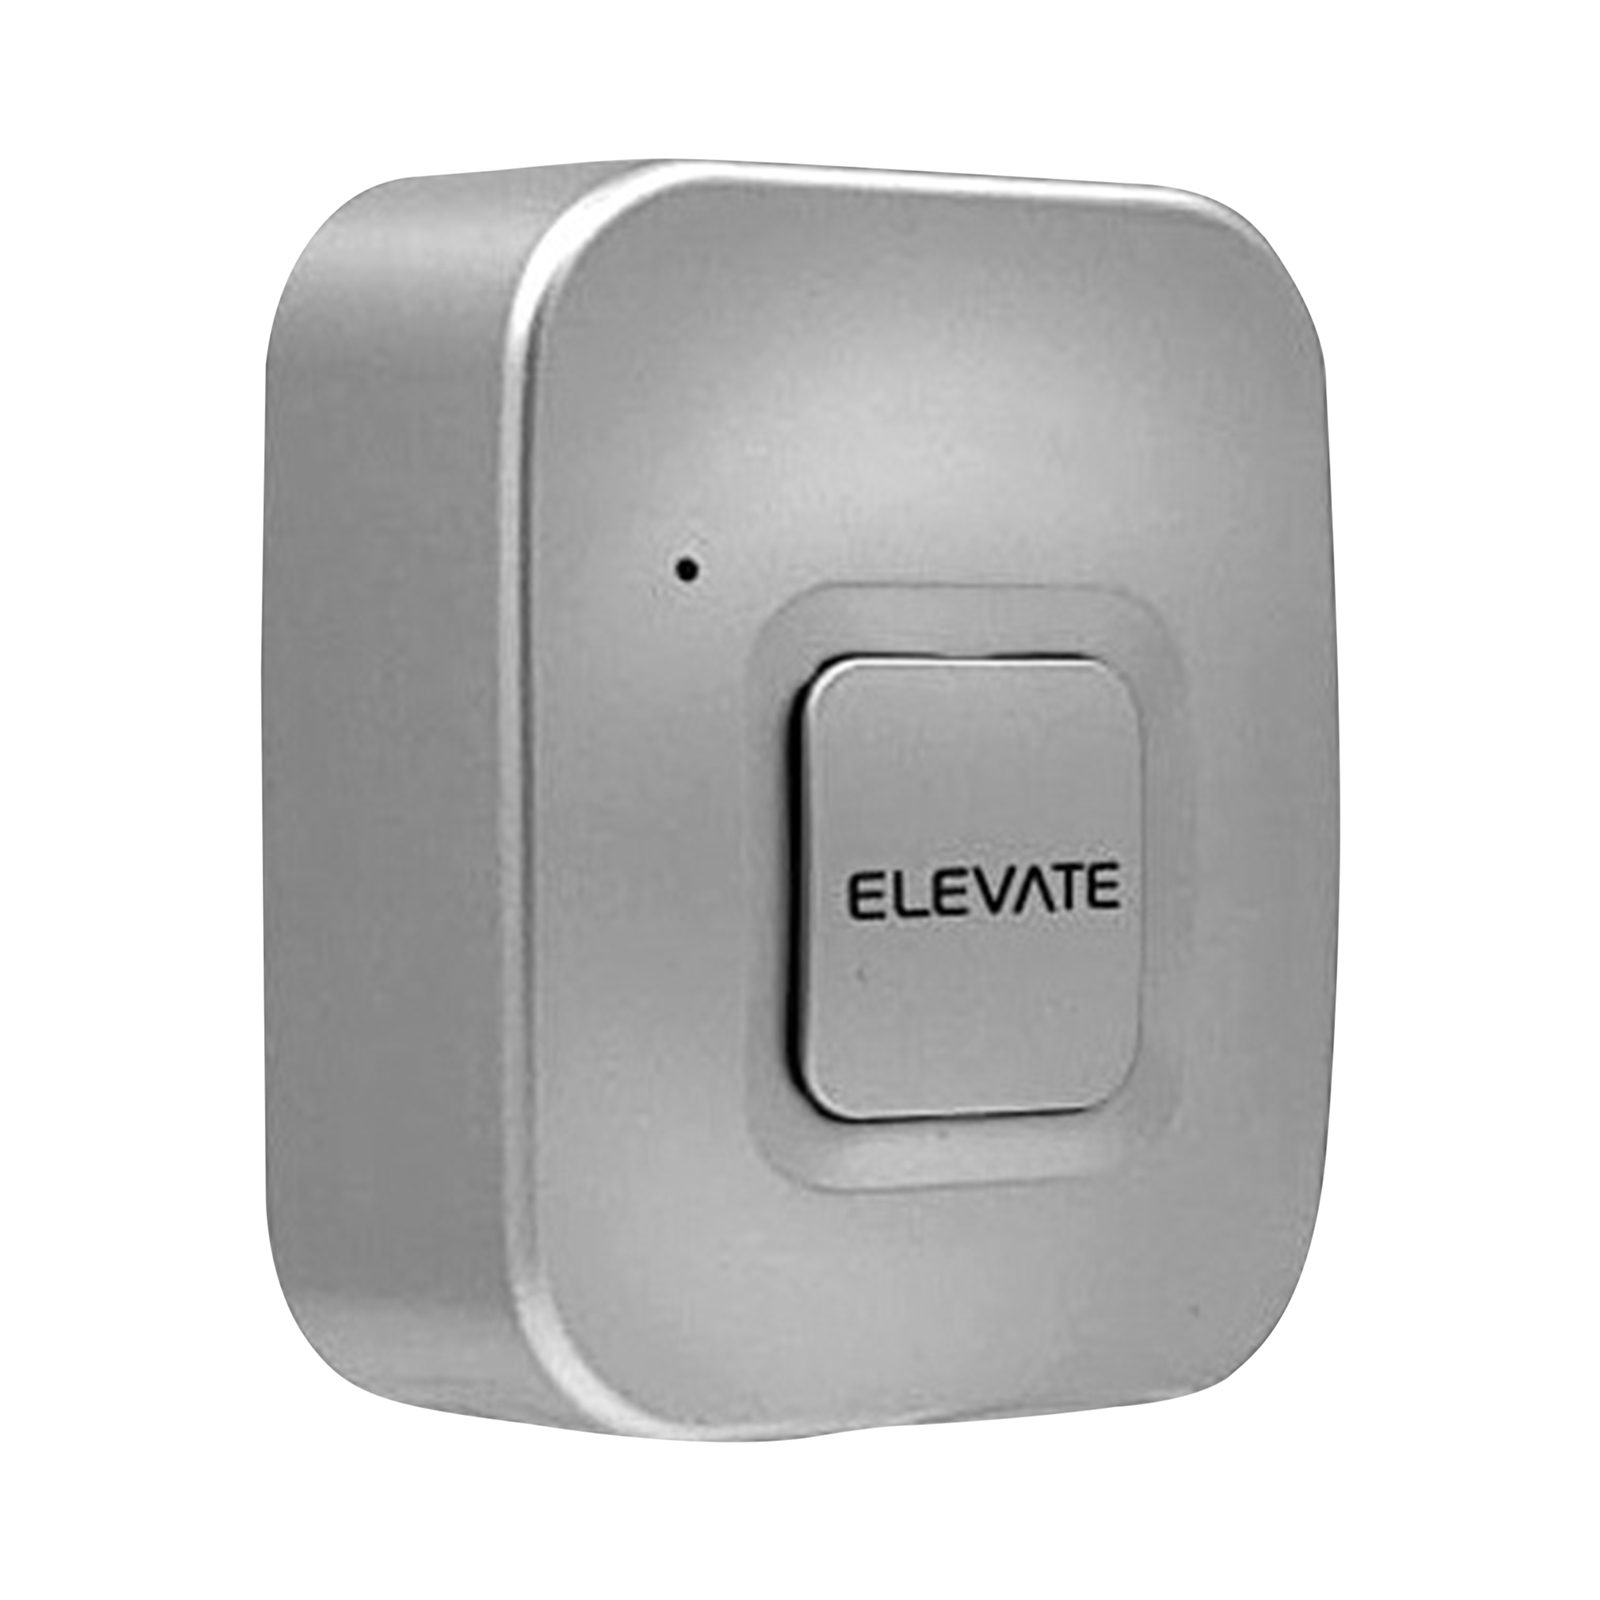 Elevate Compact Air Freshener Fragrance Dispenser, Silver